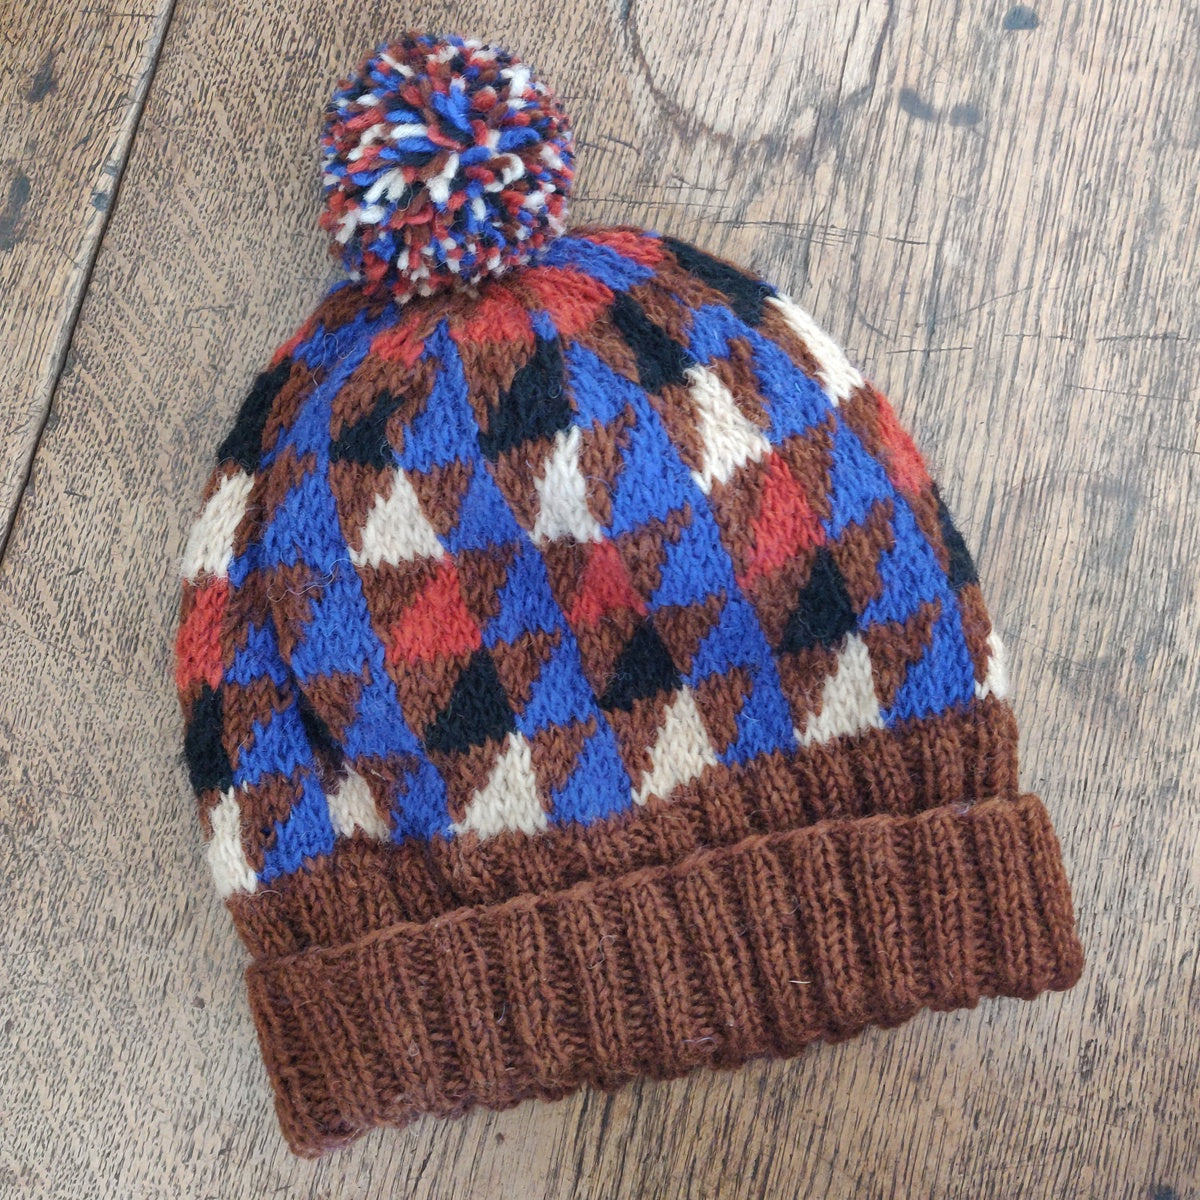 Kit Wood's Hat